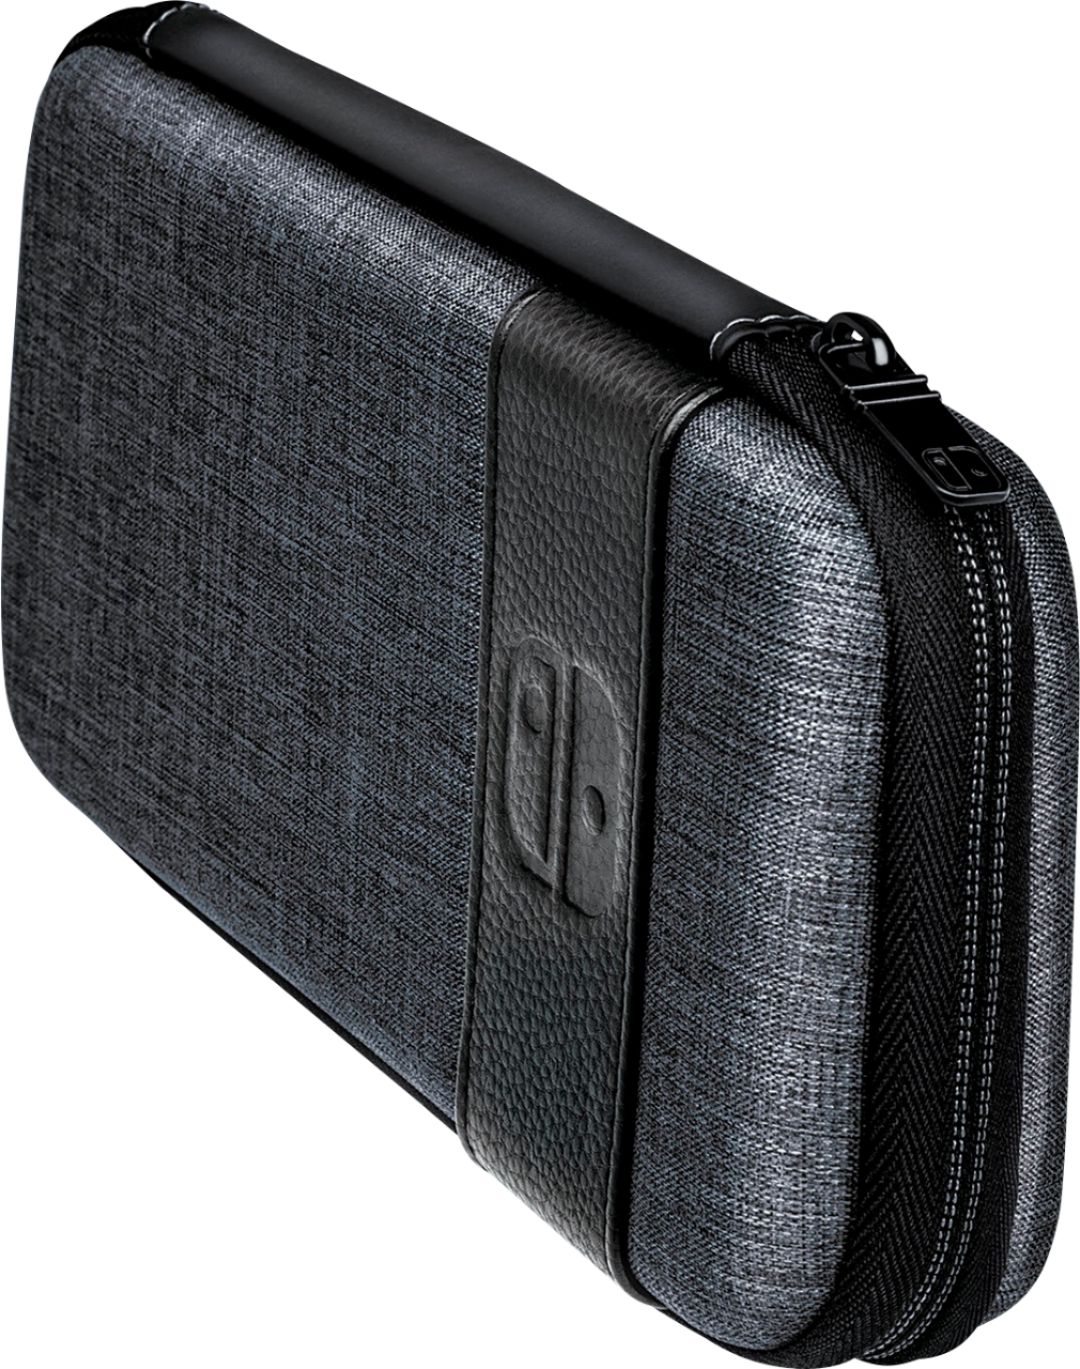 Elite Edition Starter Kit for Nintendo Switch (Gray) + Free Store Pickup $15